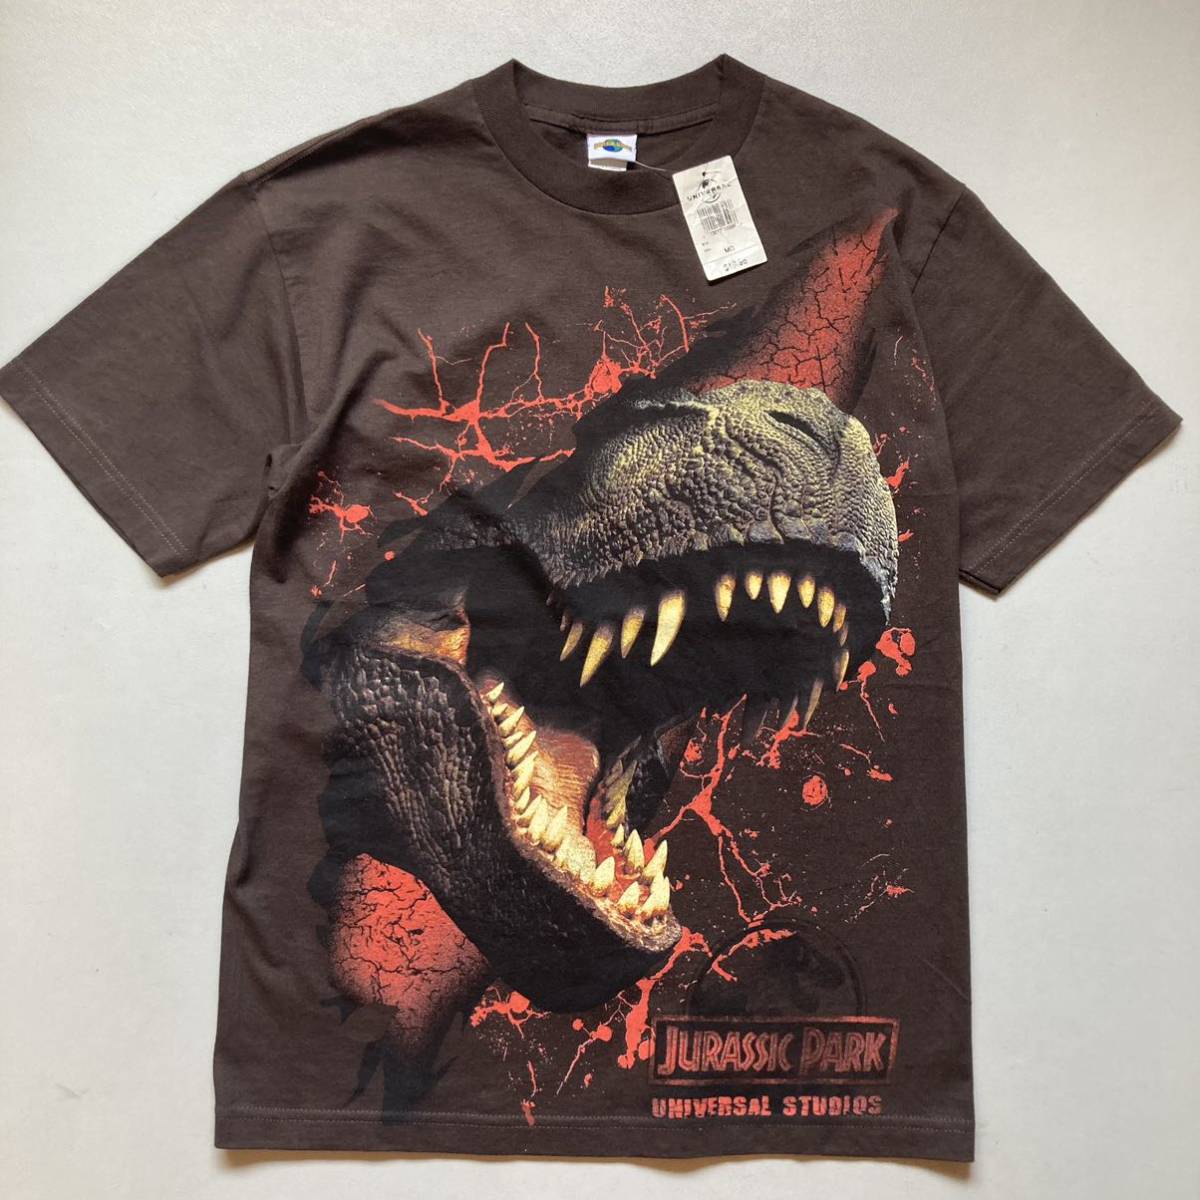 00s Jurassic park universal studios T-shirt「DEAD STOCK」ジュラシックパーク デッドストック ユニバーサルスタジオオフィシャルTシャツ